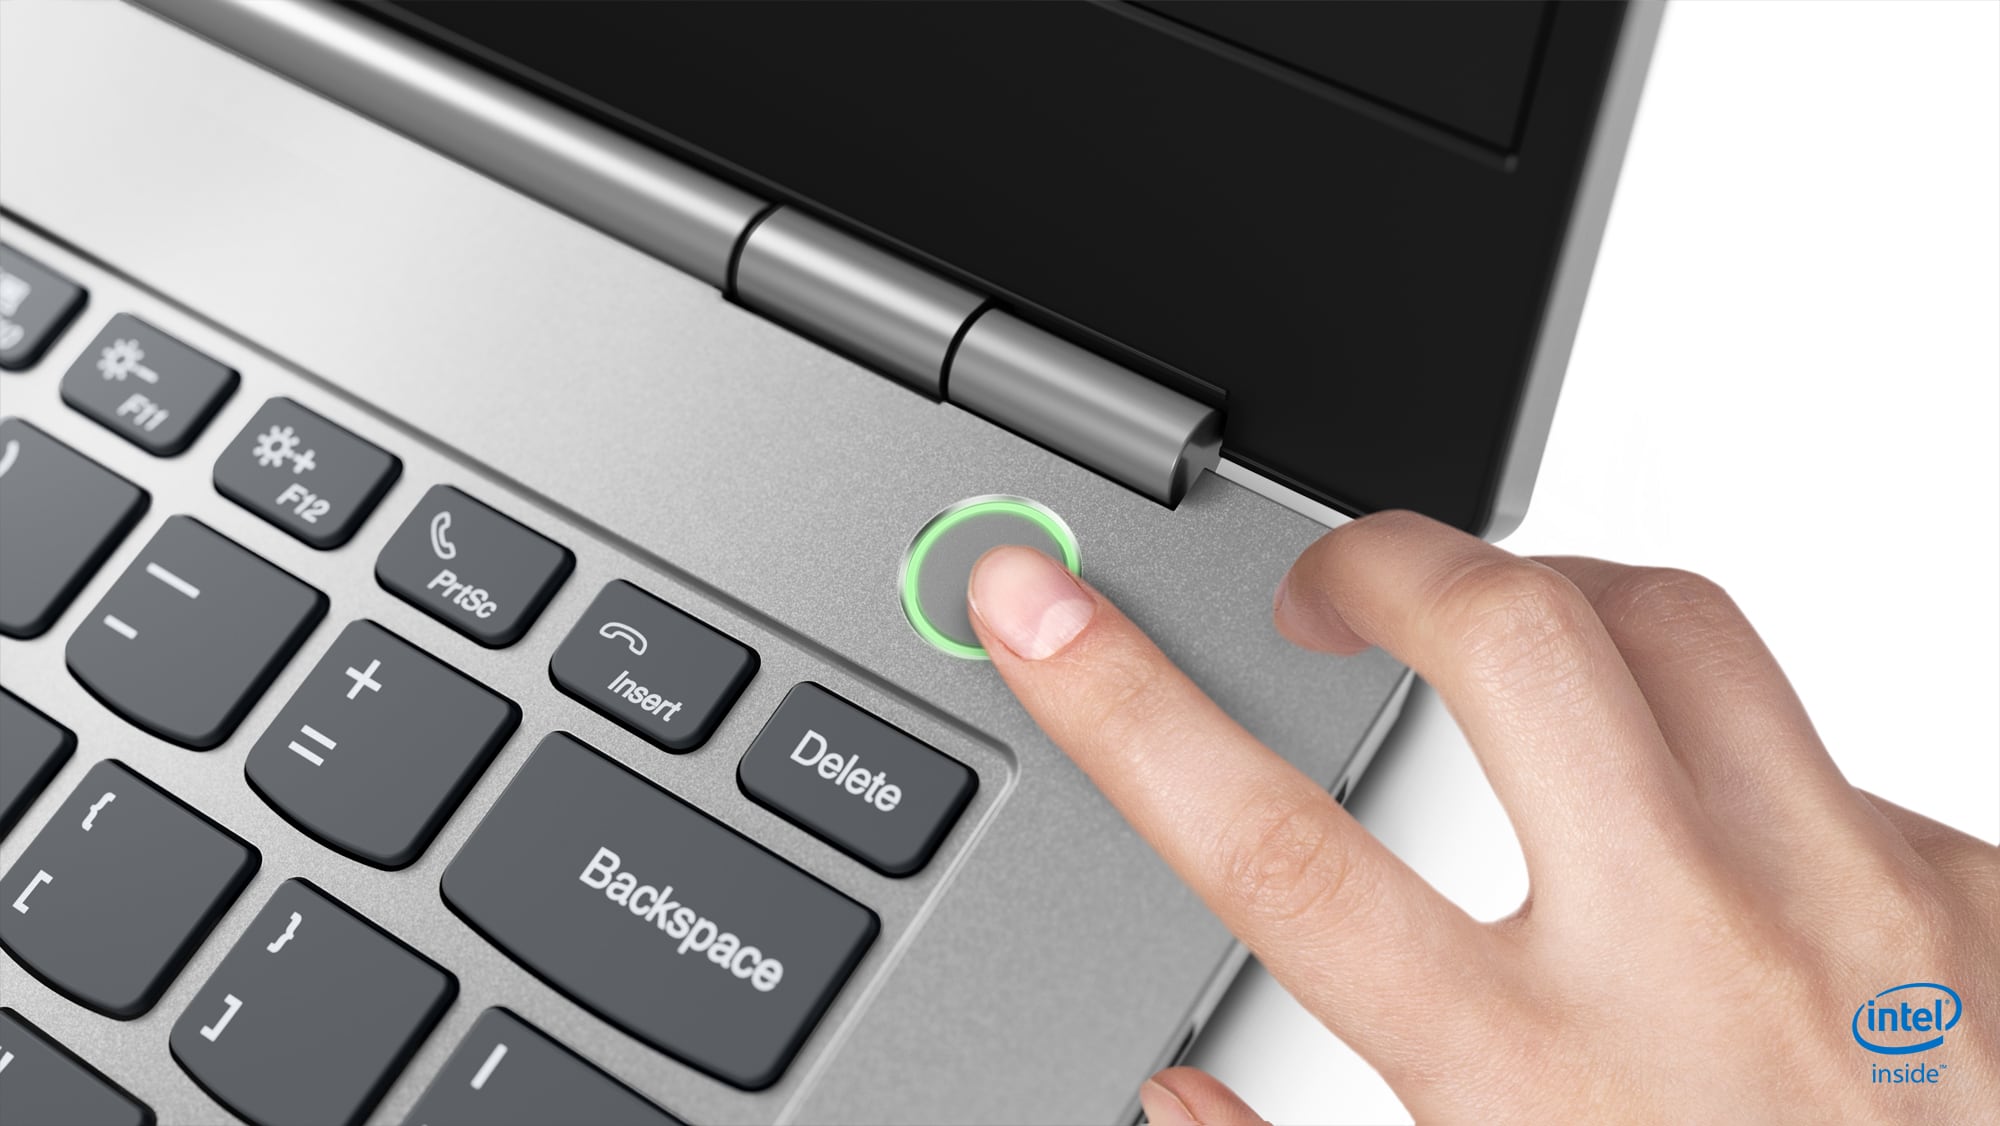 Finger on glowing fingerprint sensor on laptop